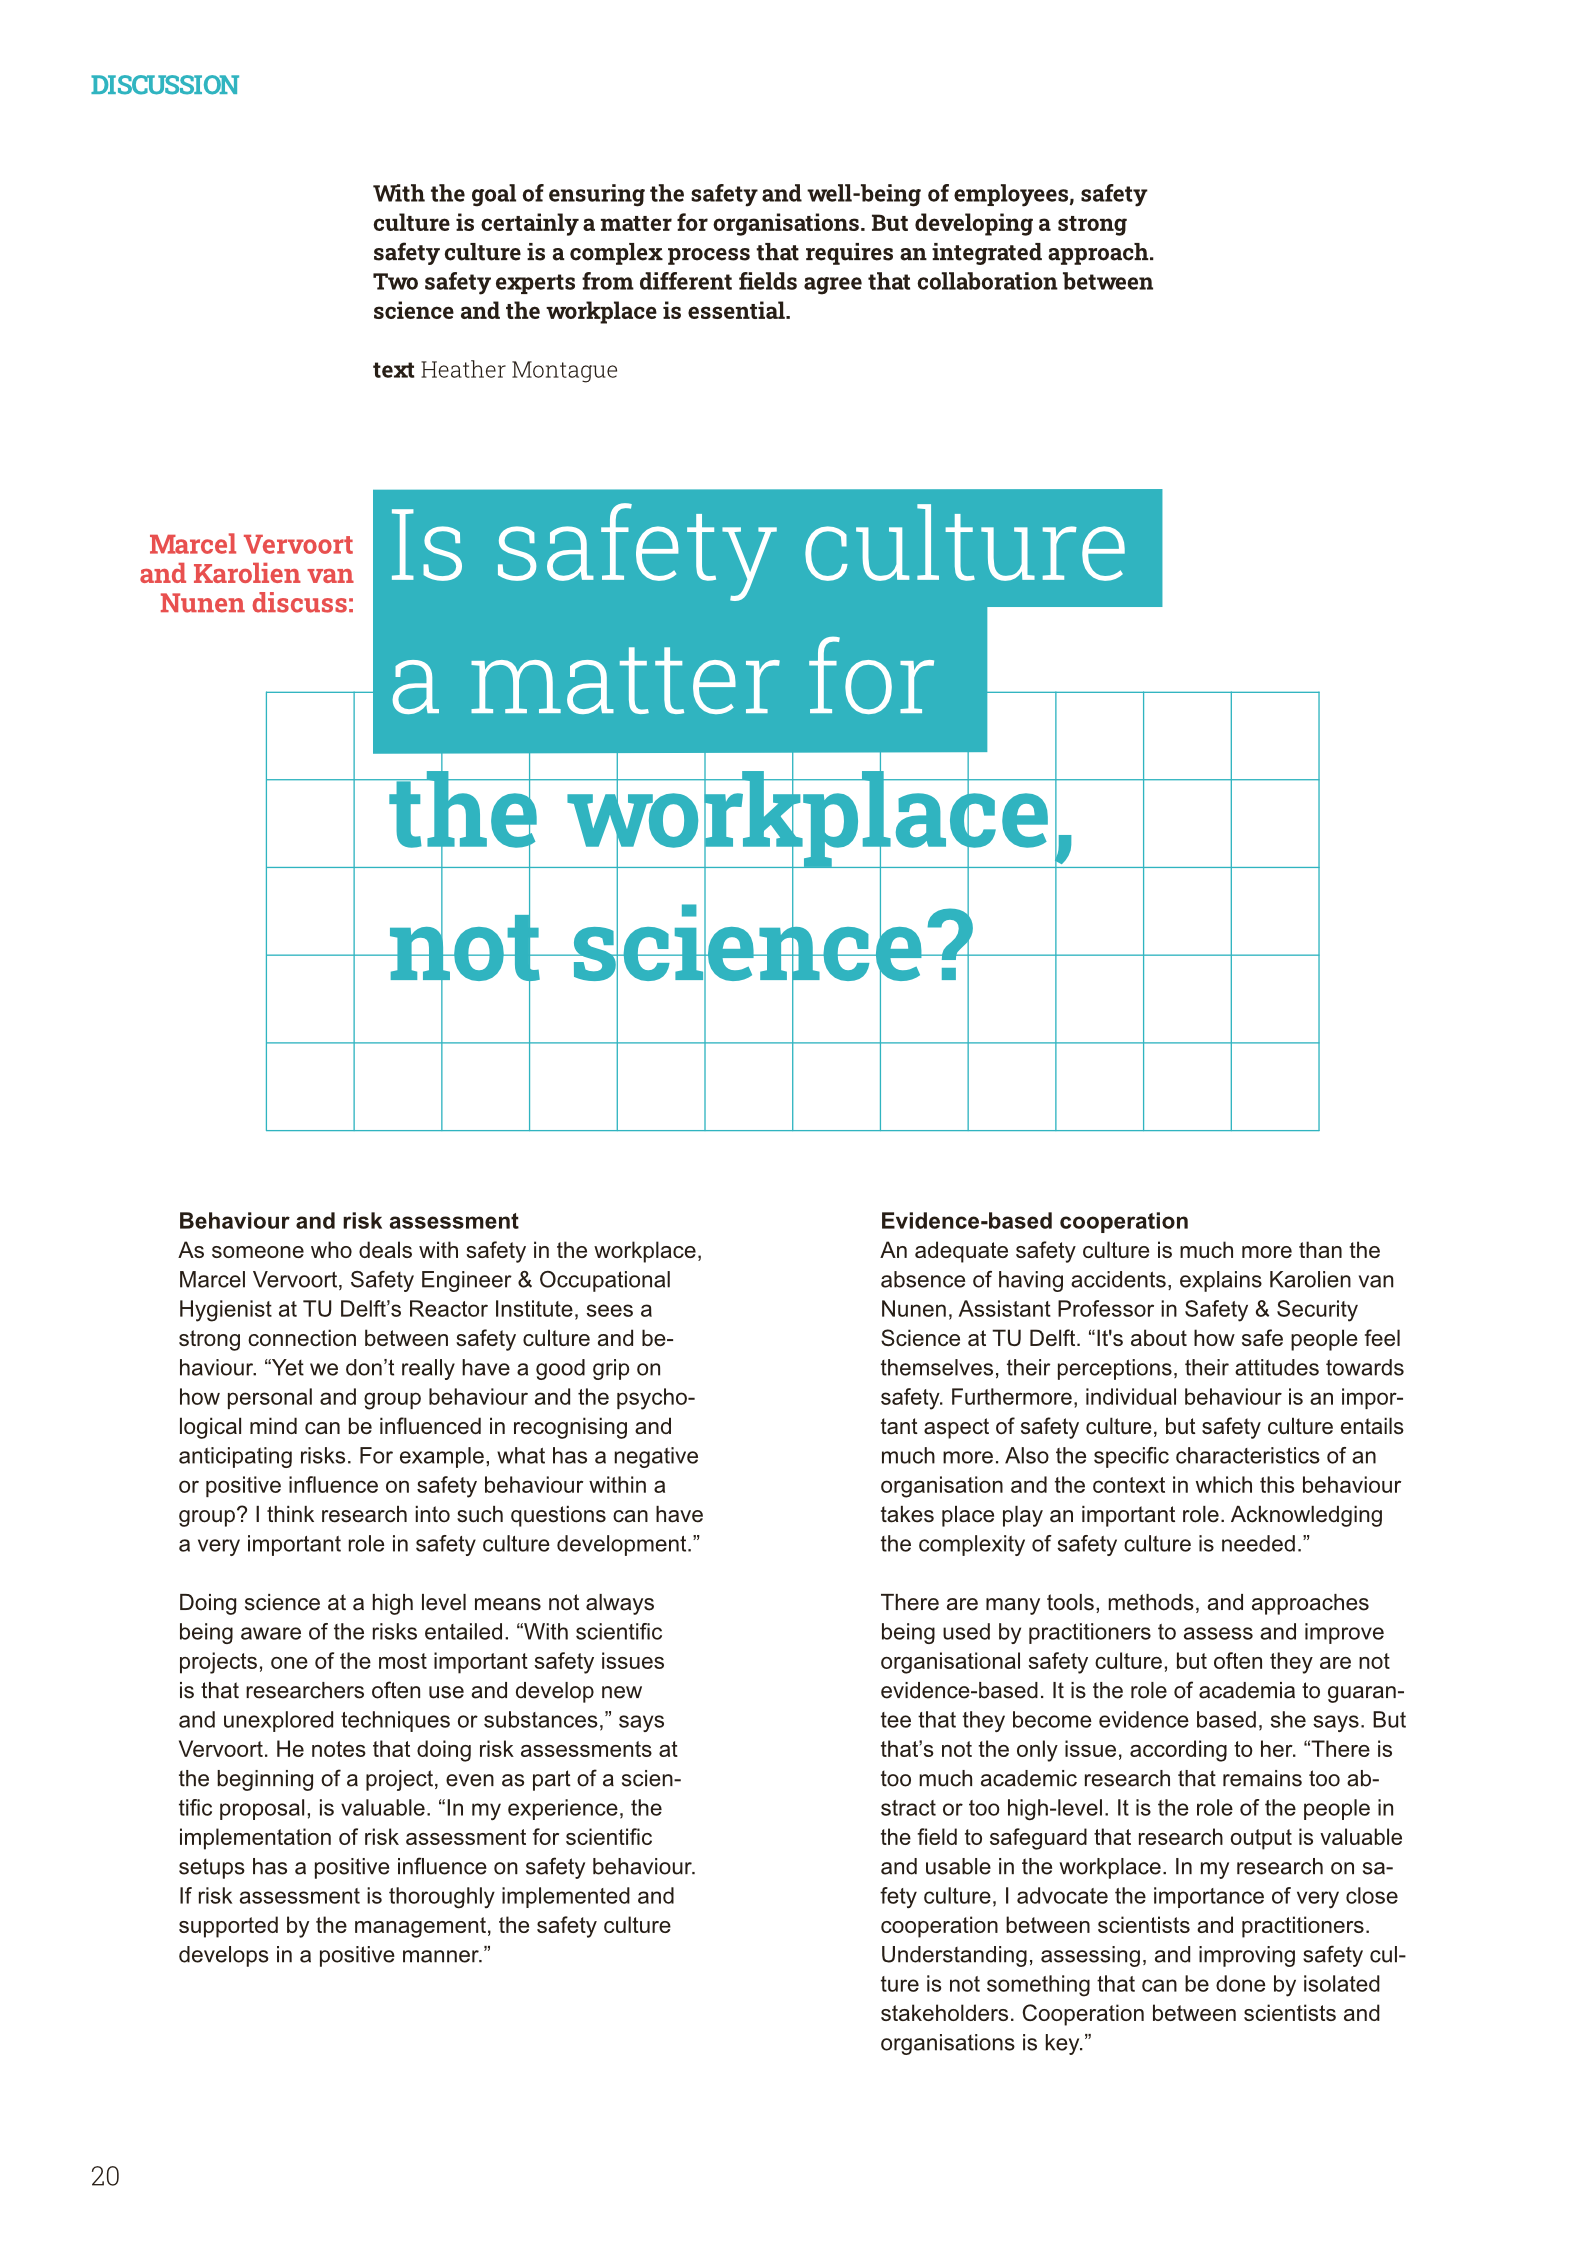 20 Winning Workplace Safety Goals